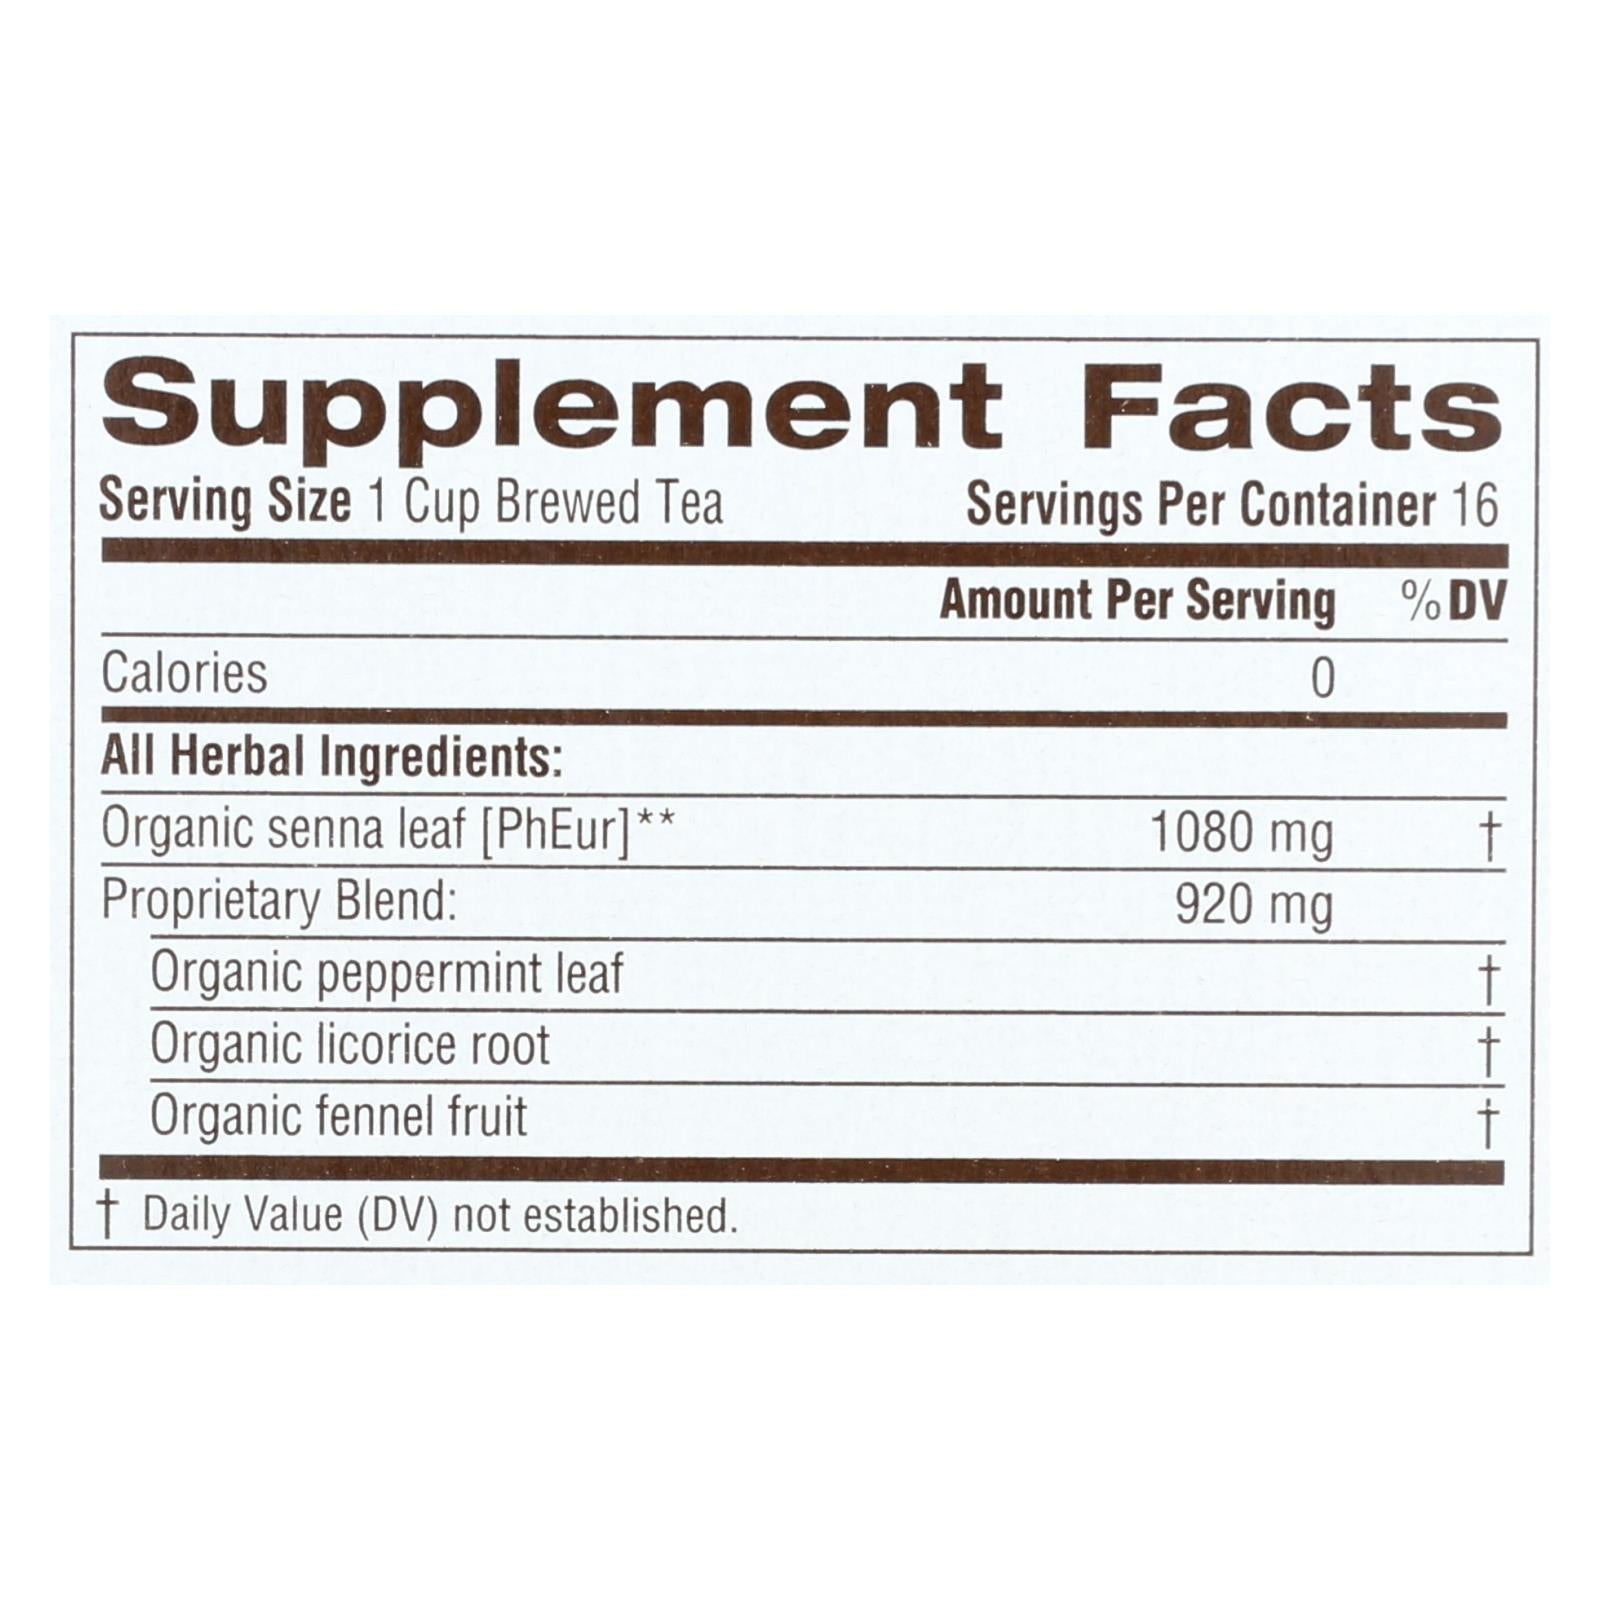 Traditional Medicinals Organic Smooth Tea - Senna Peppermint - 16 Bags